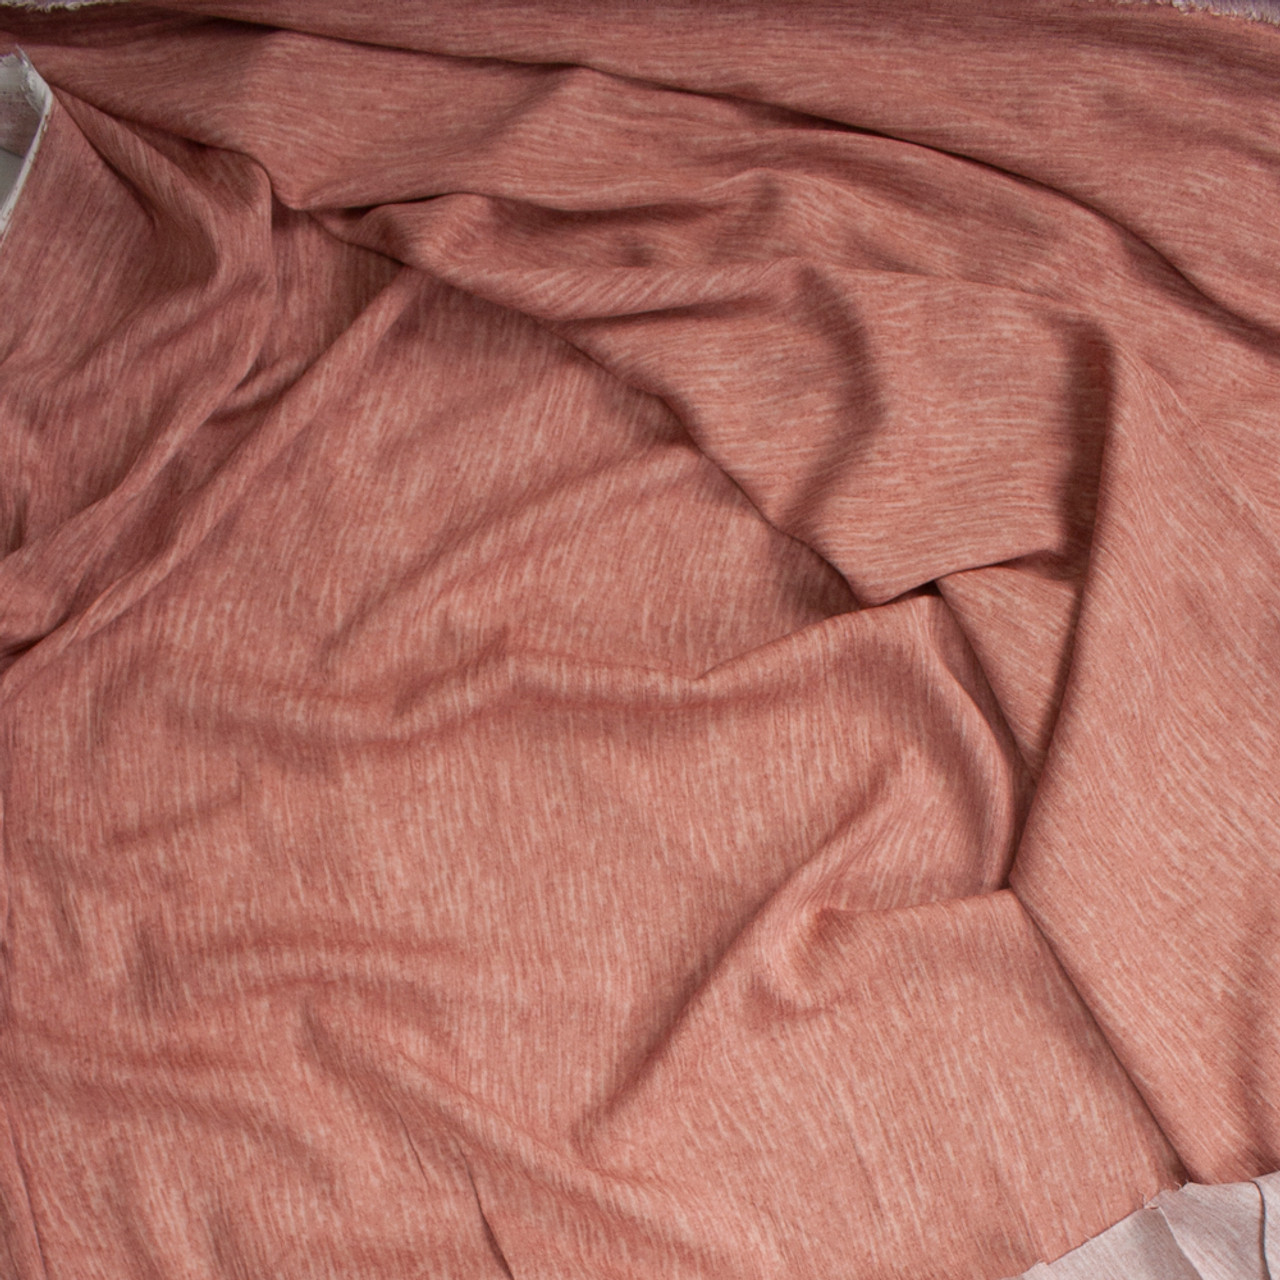 Cali Fabrics Hot Pink, Tan, and Black Boho Stripe Rayon Gauze